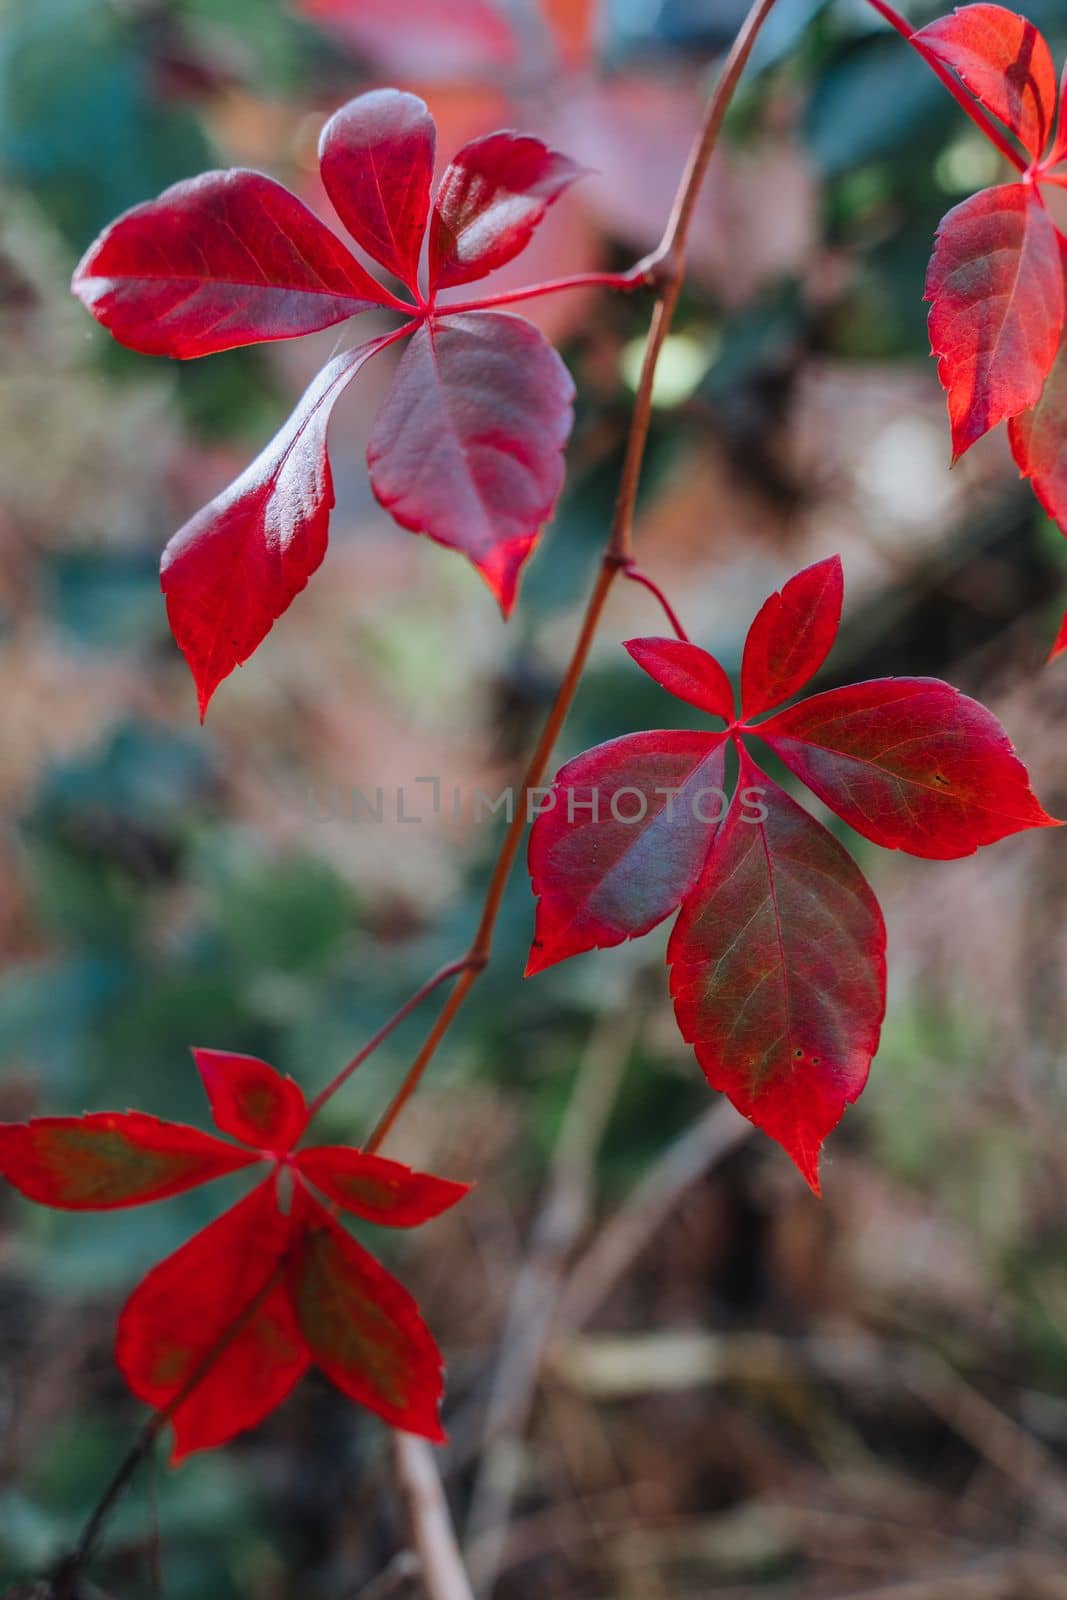 Foliage. Autumn leaves background. Macro shot of ivy leaves turning red